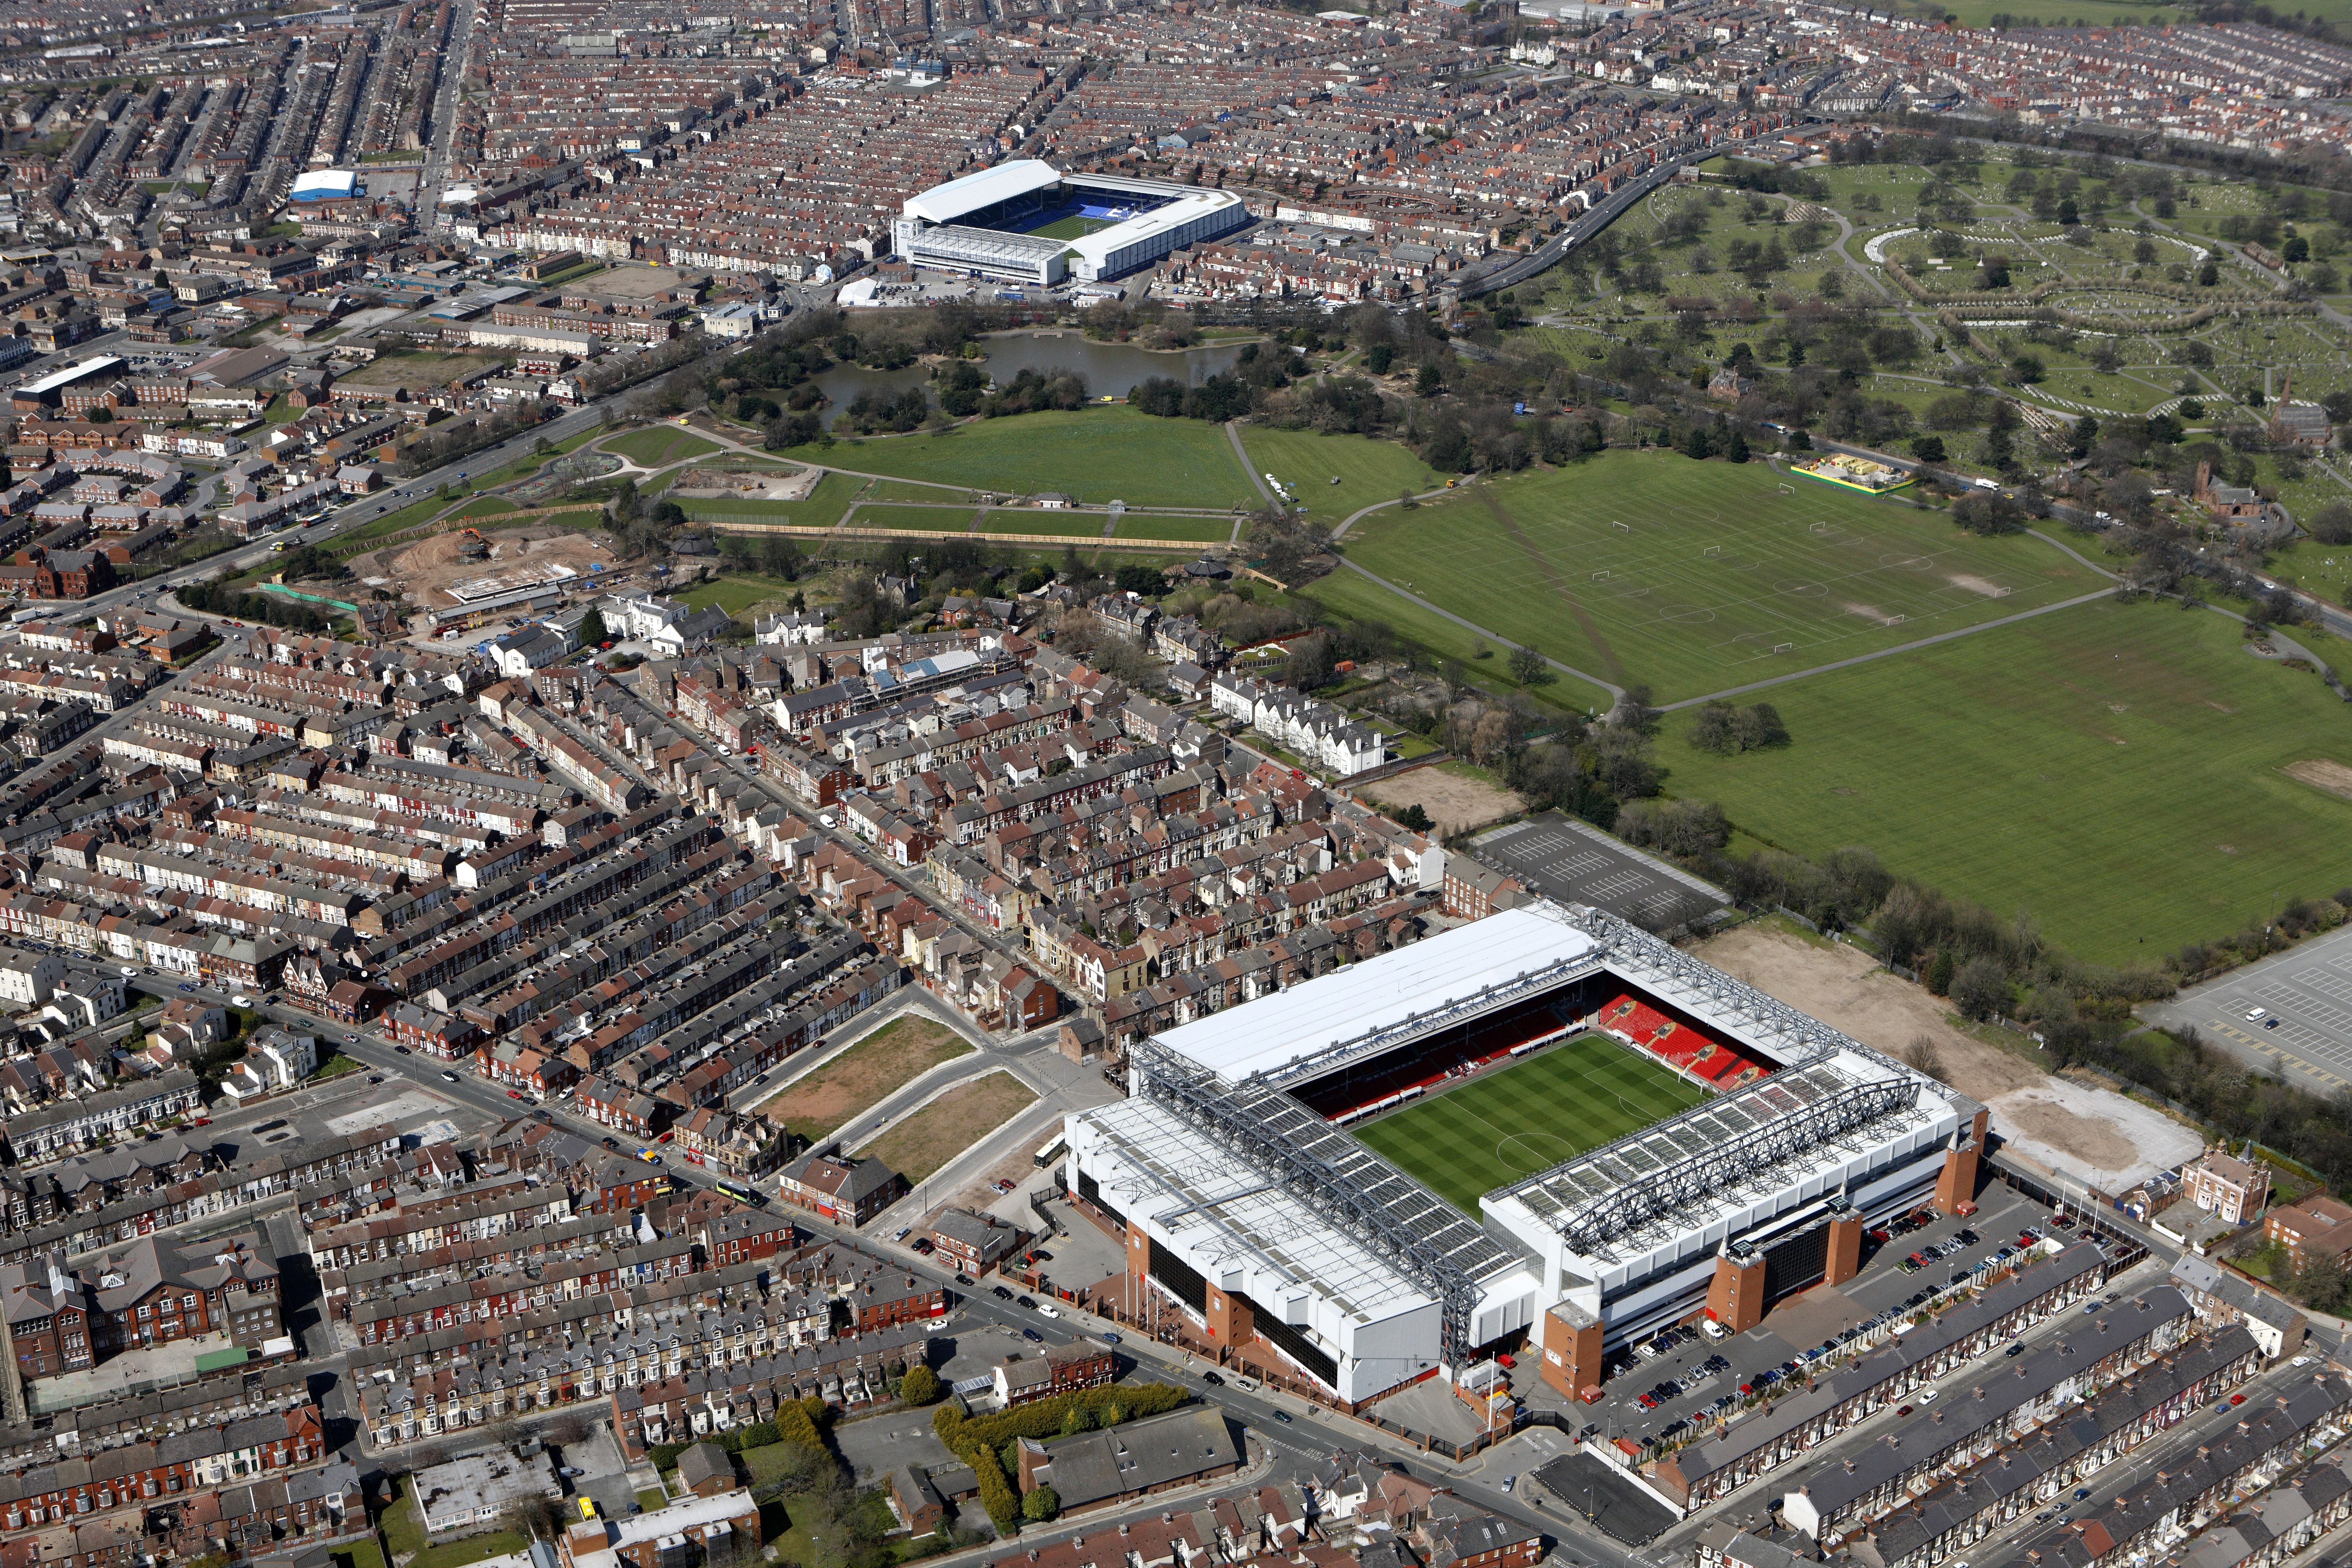 Liverpool and Everton stadiums